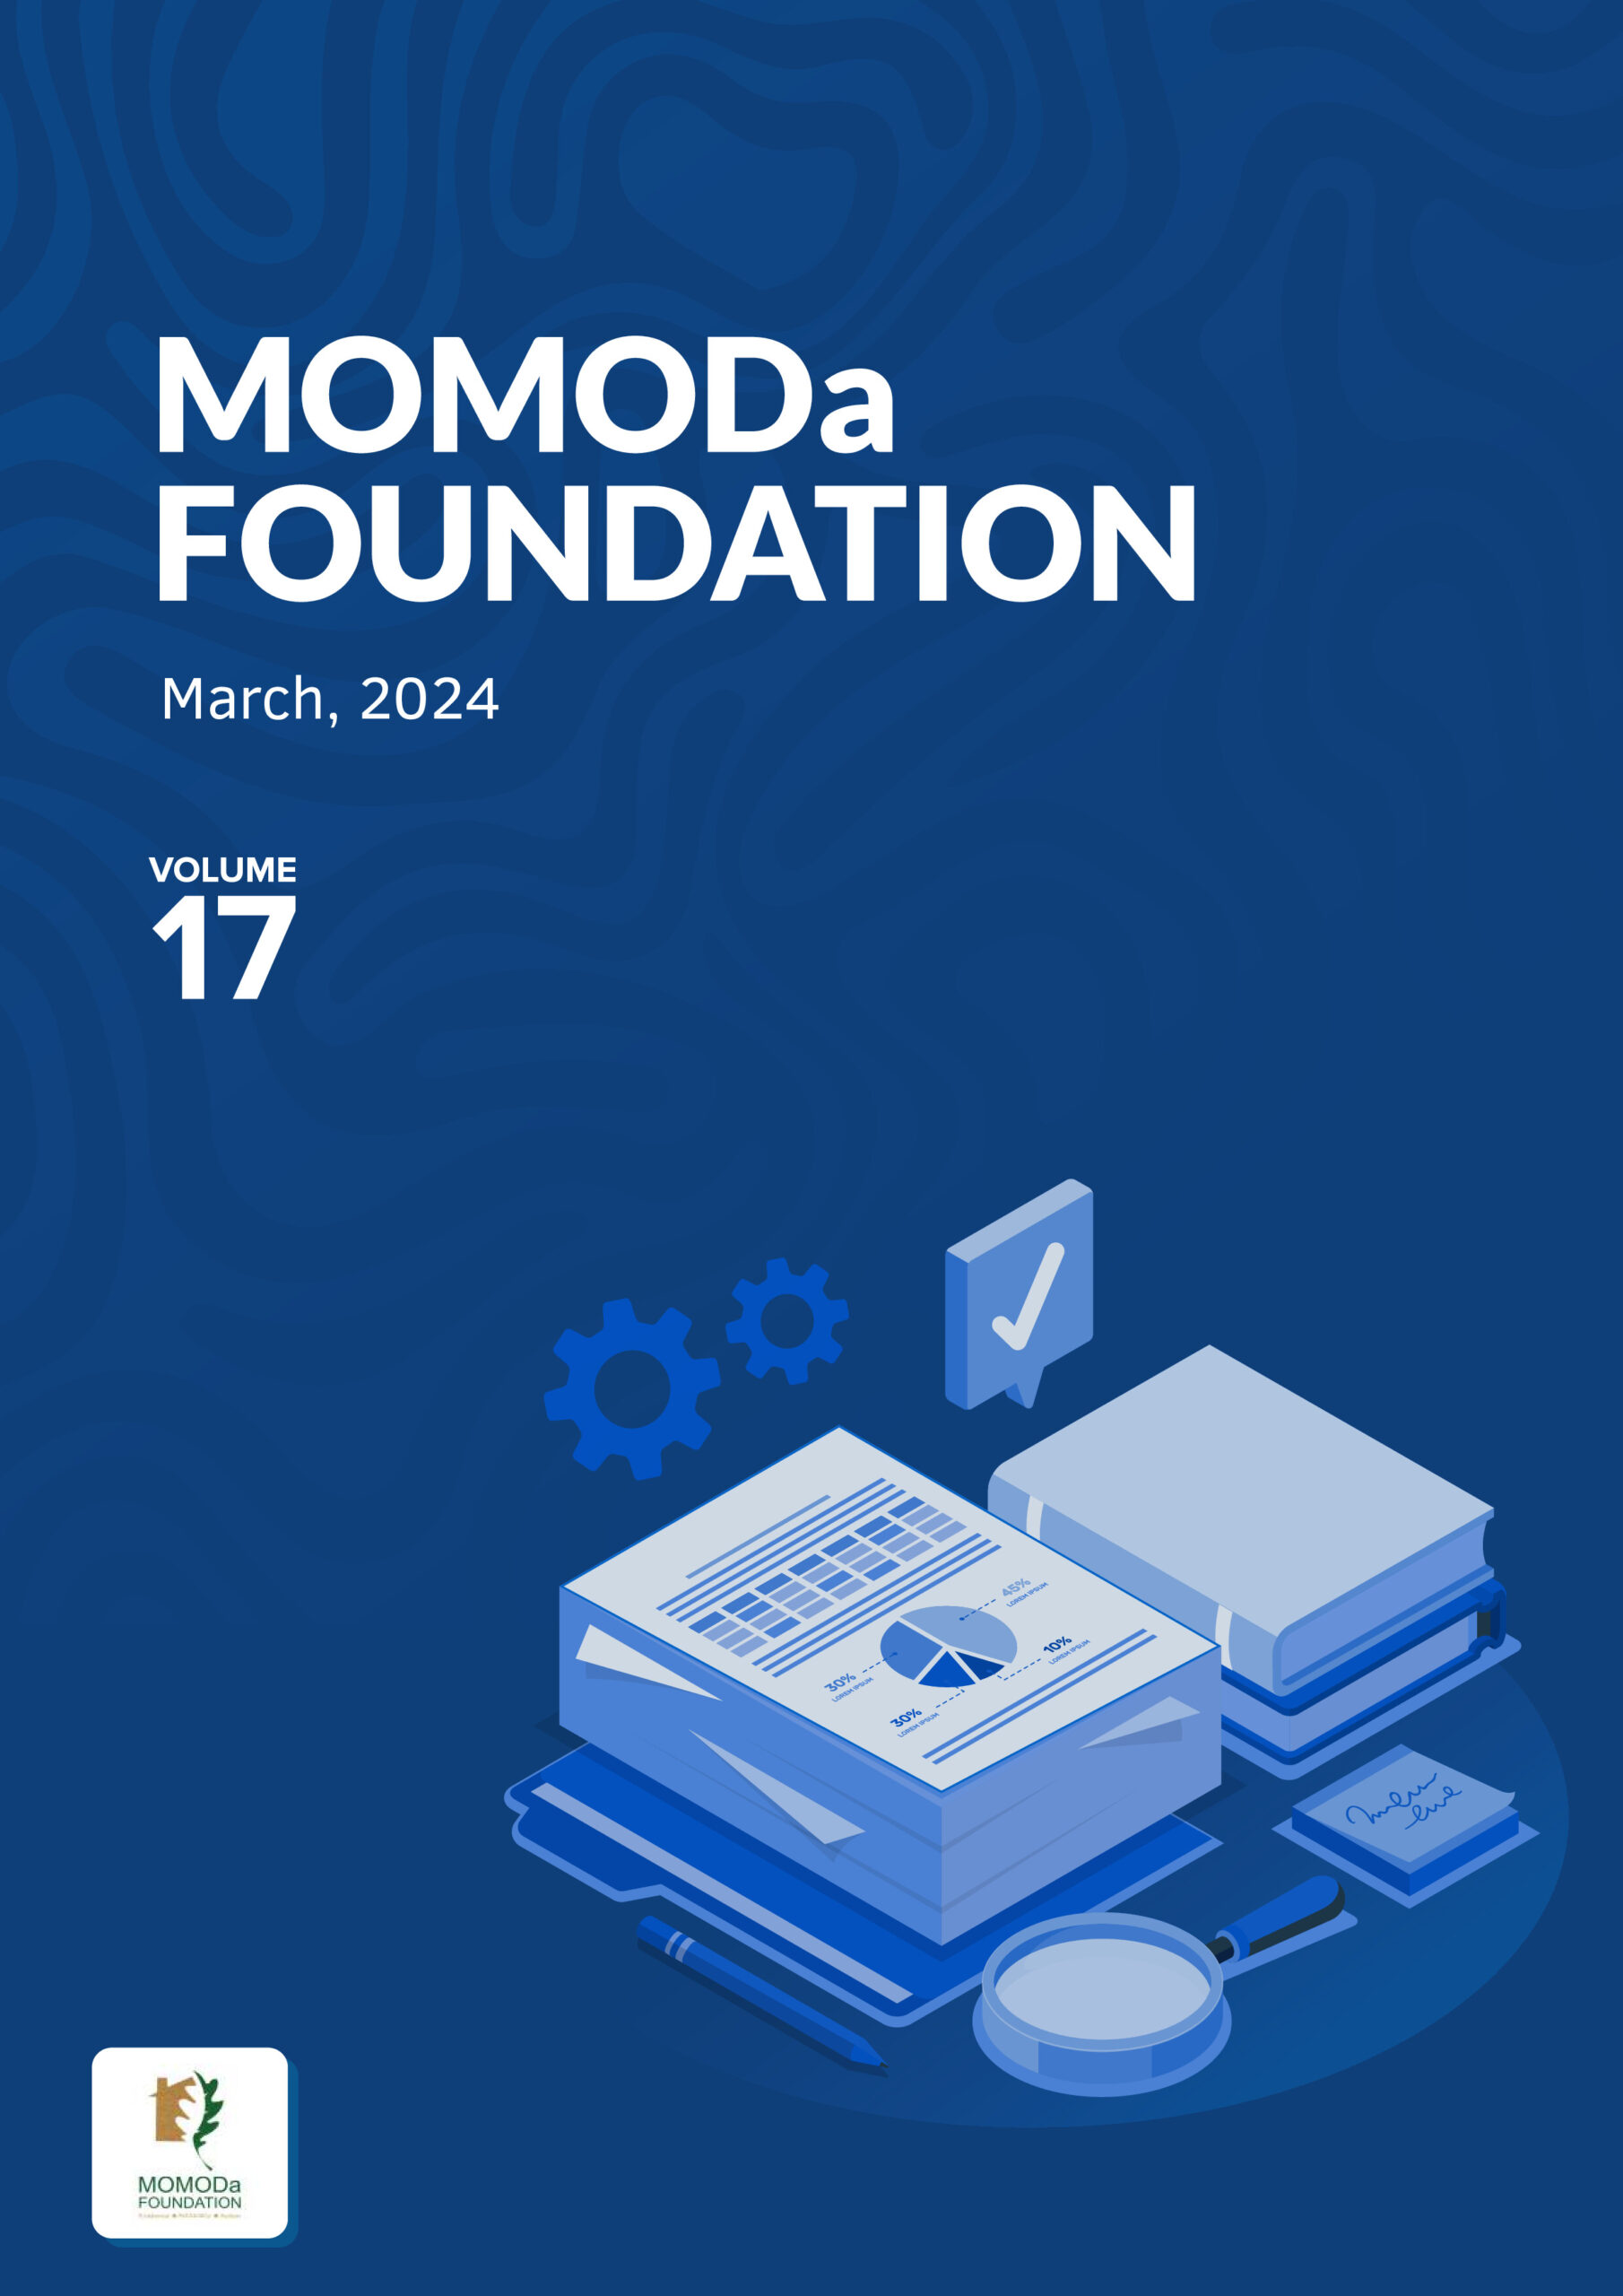 MOMODa FOUNDATION Newsletter March 2024 (17th Volume)